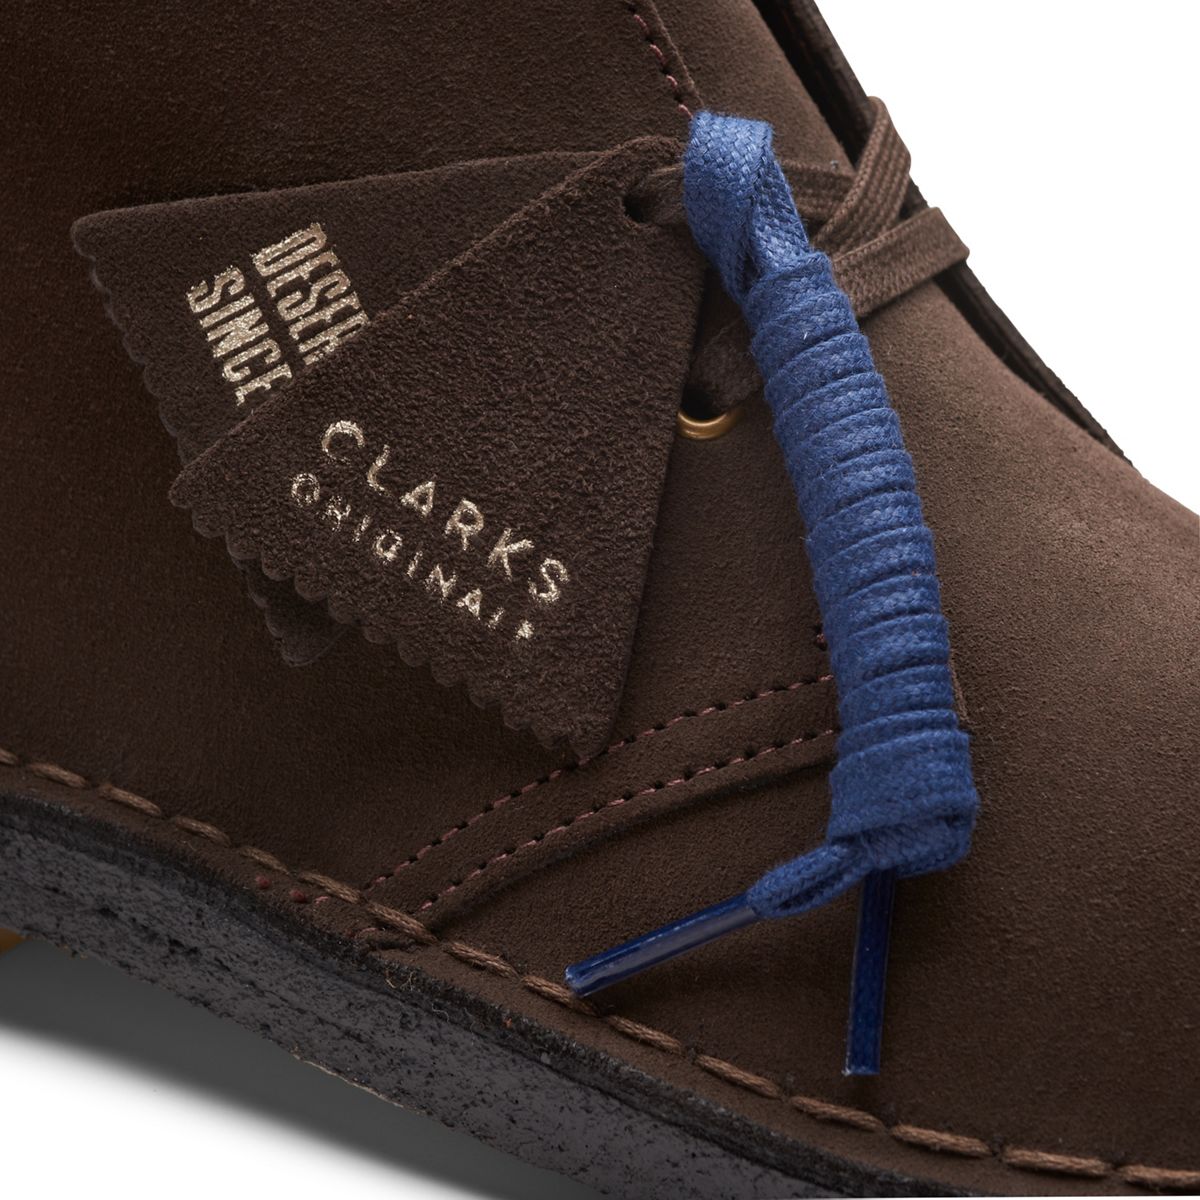 Borgerskab Åh gud Måling Desert Boot Brown Suede - Clarks Canada Official Site | Clarks Shoes